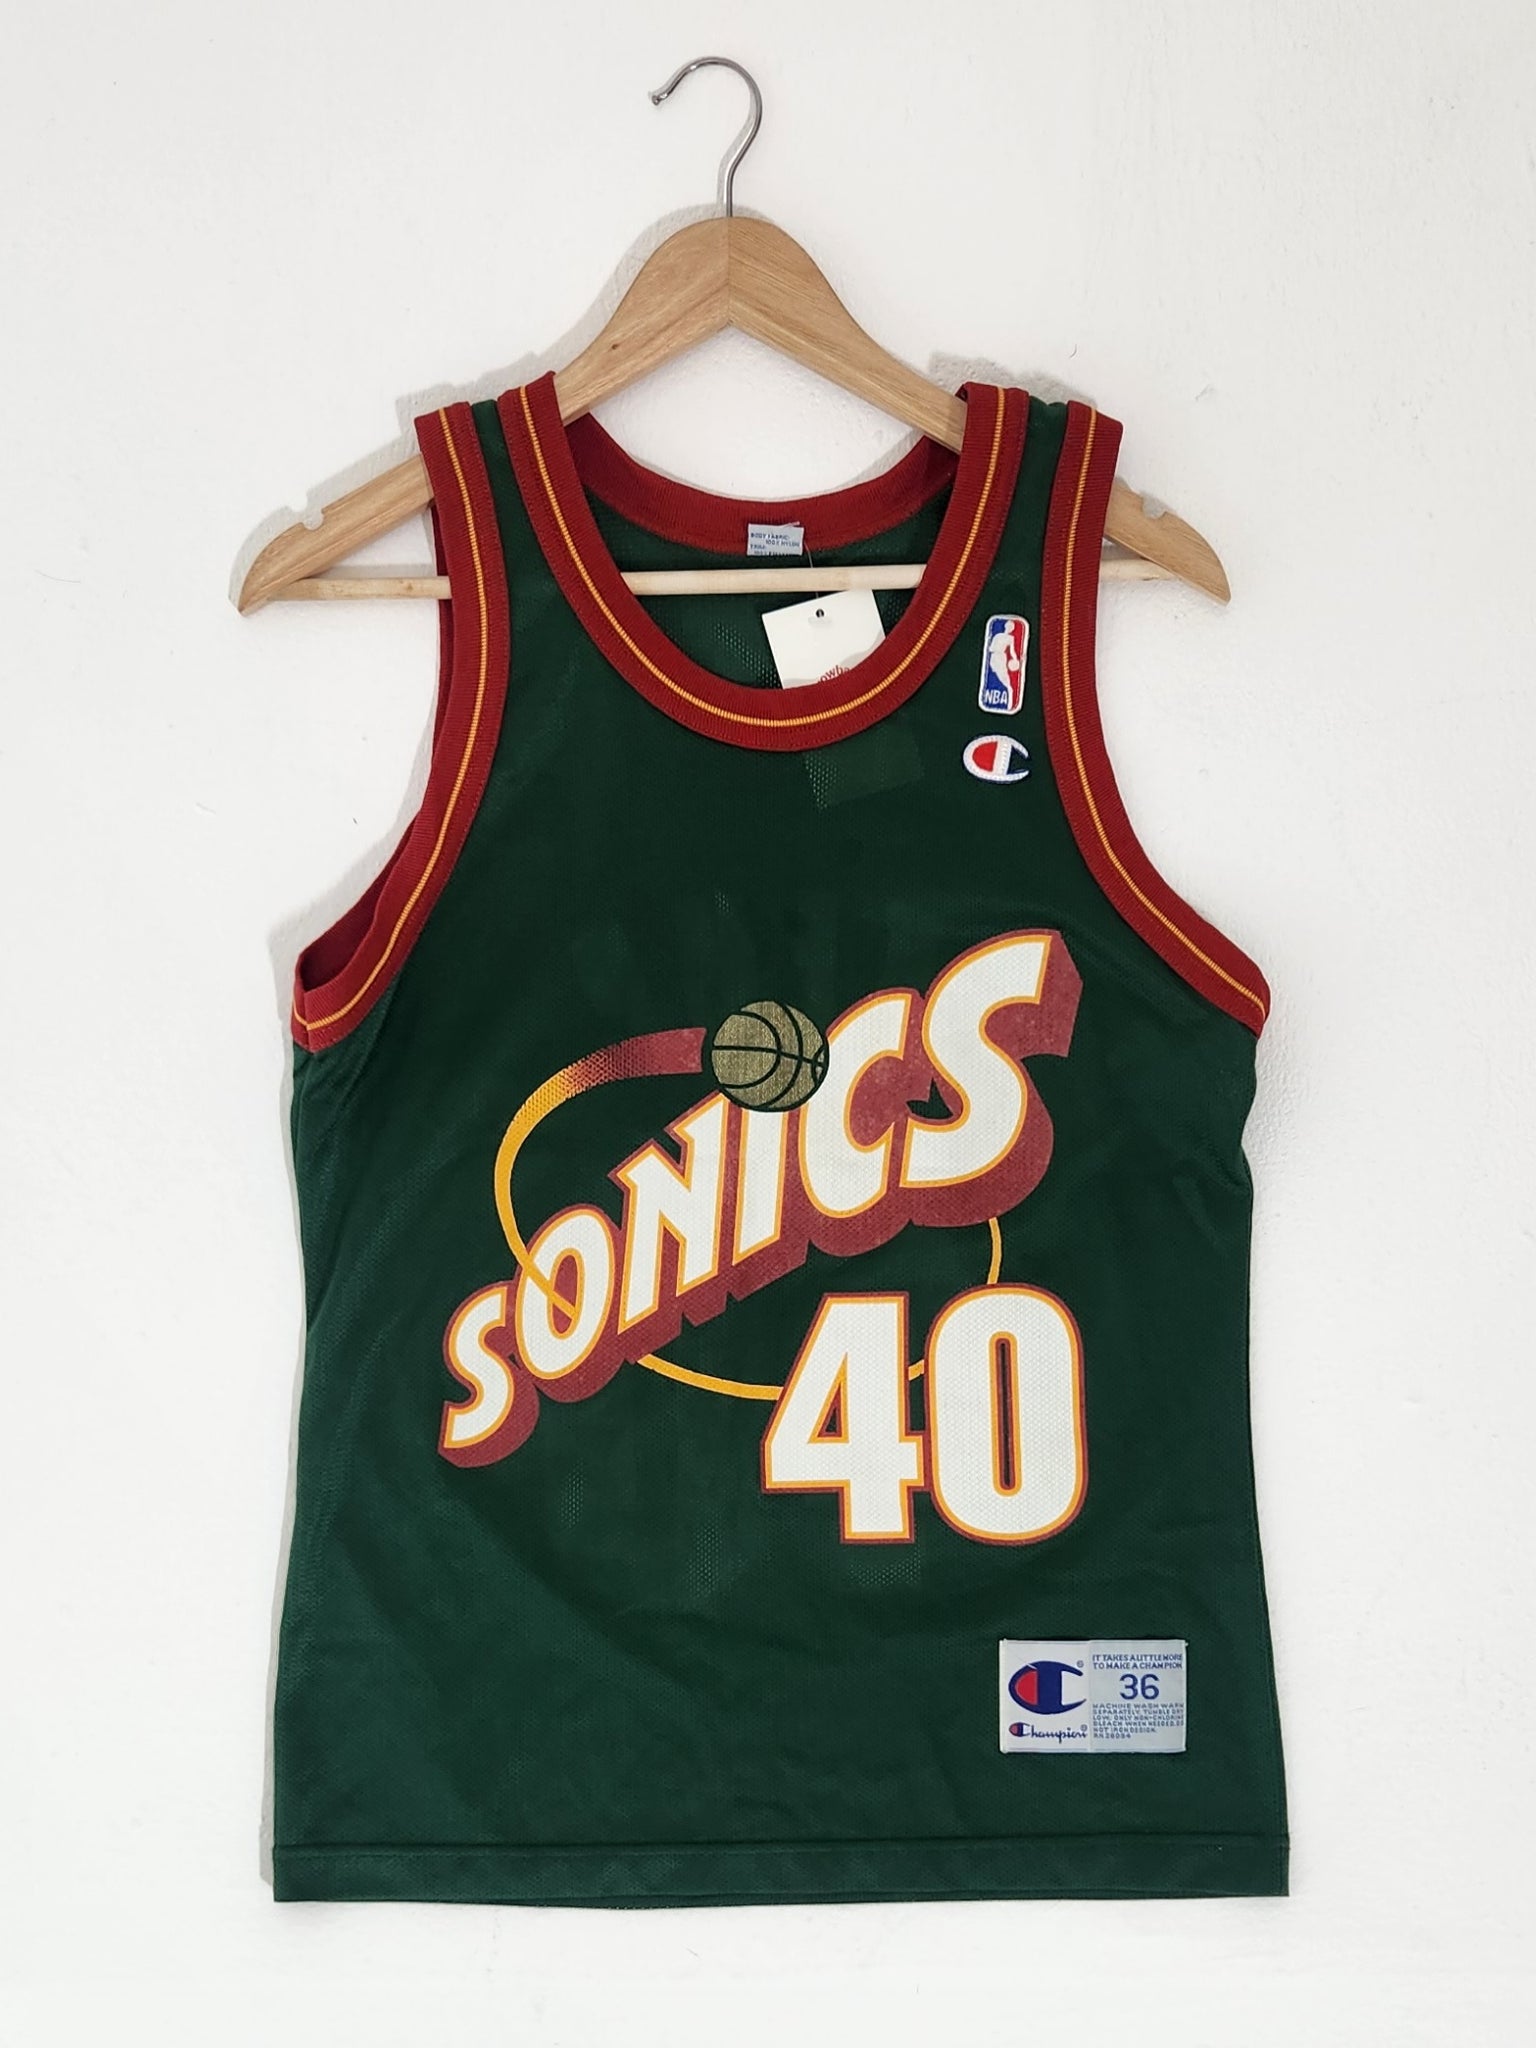 Vintage NBA Seattle Sonics Shawn Kemp Champion Jersey